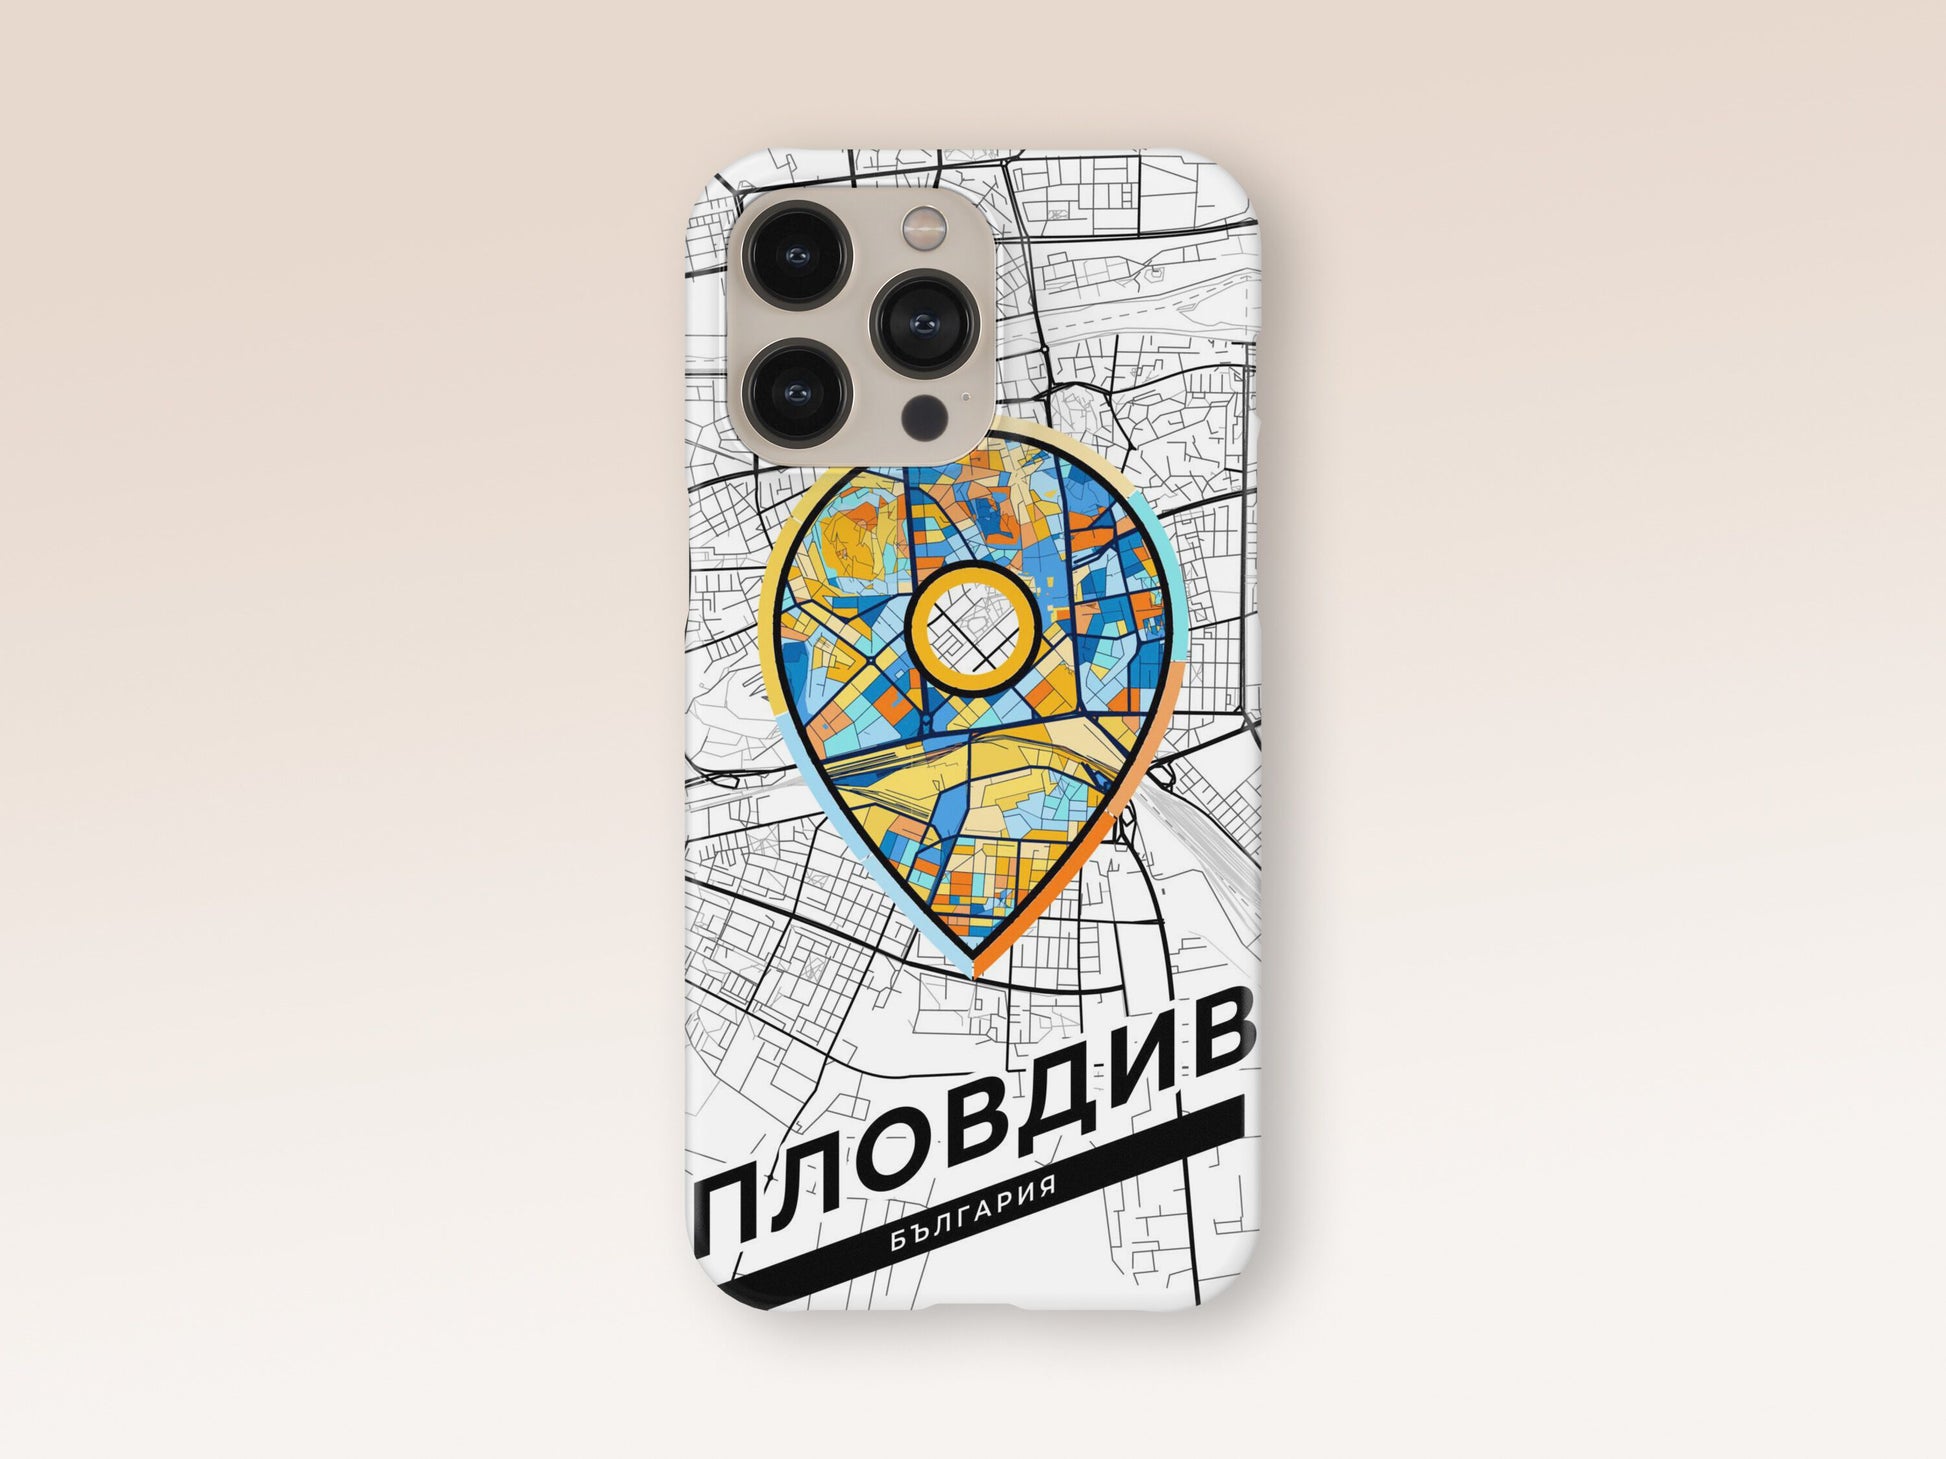 Пловдив България slim phone case with colorful icon 1